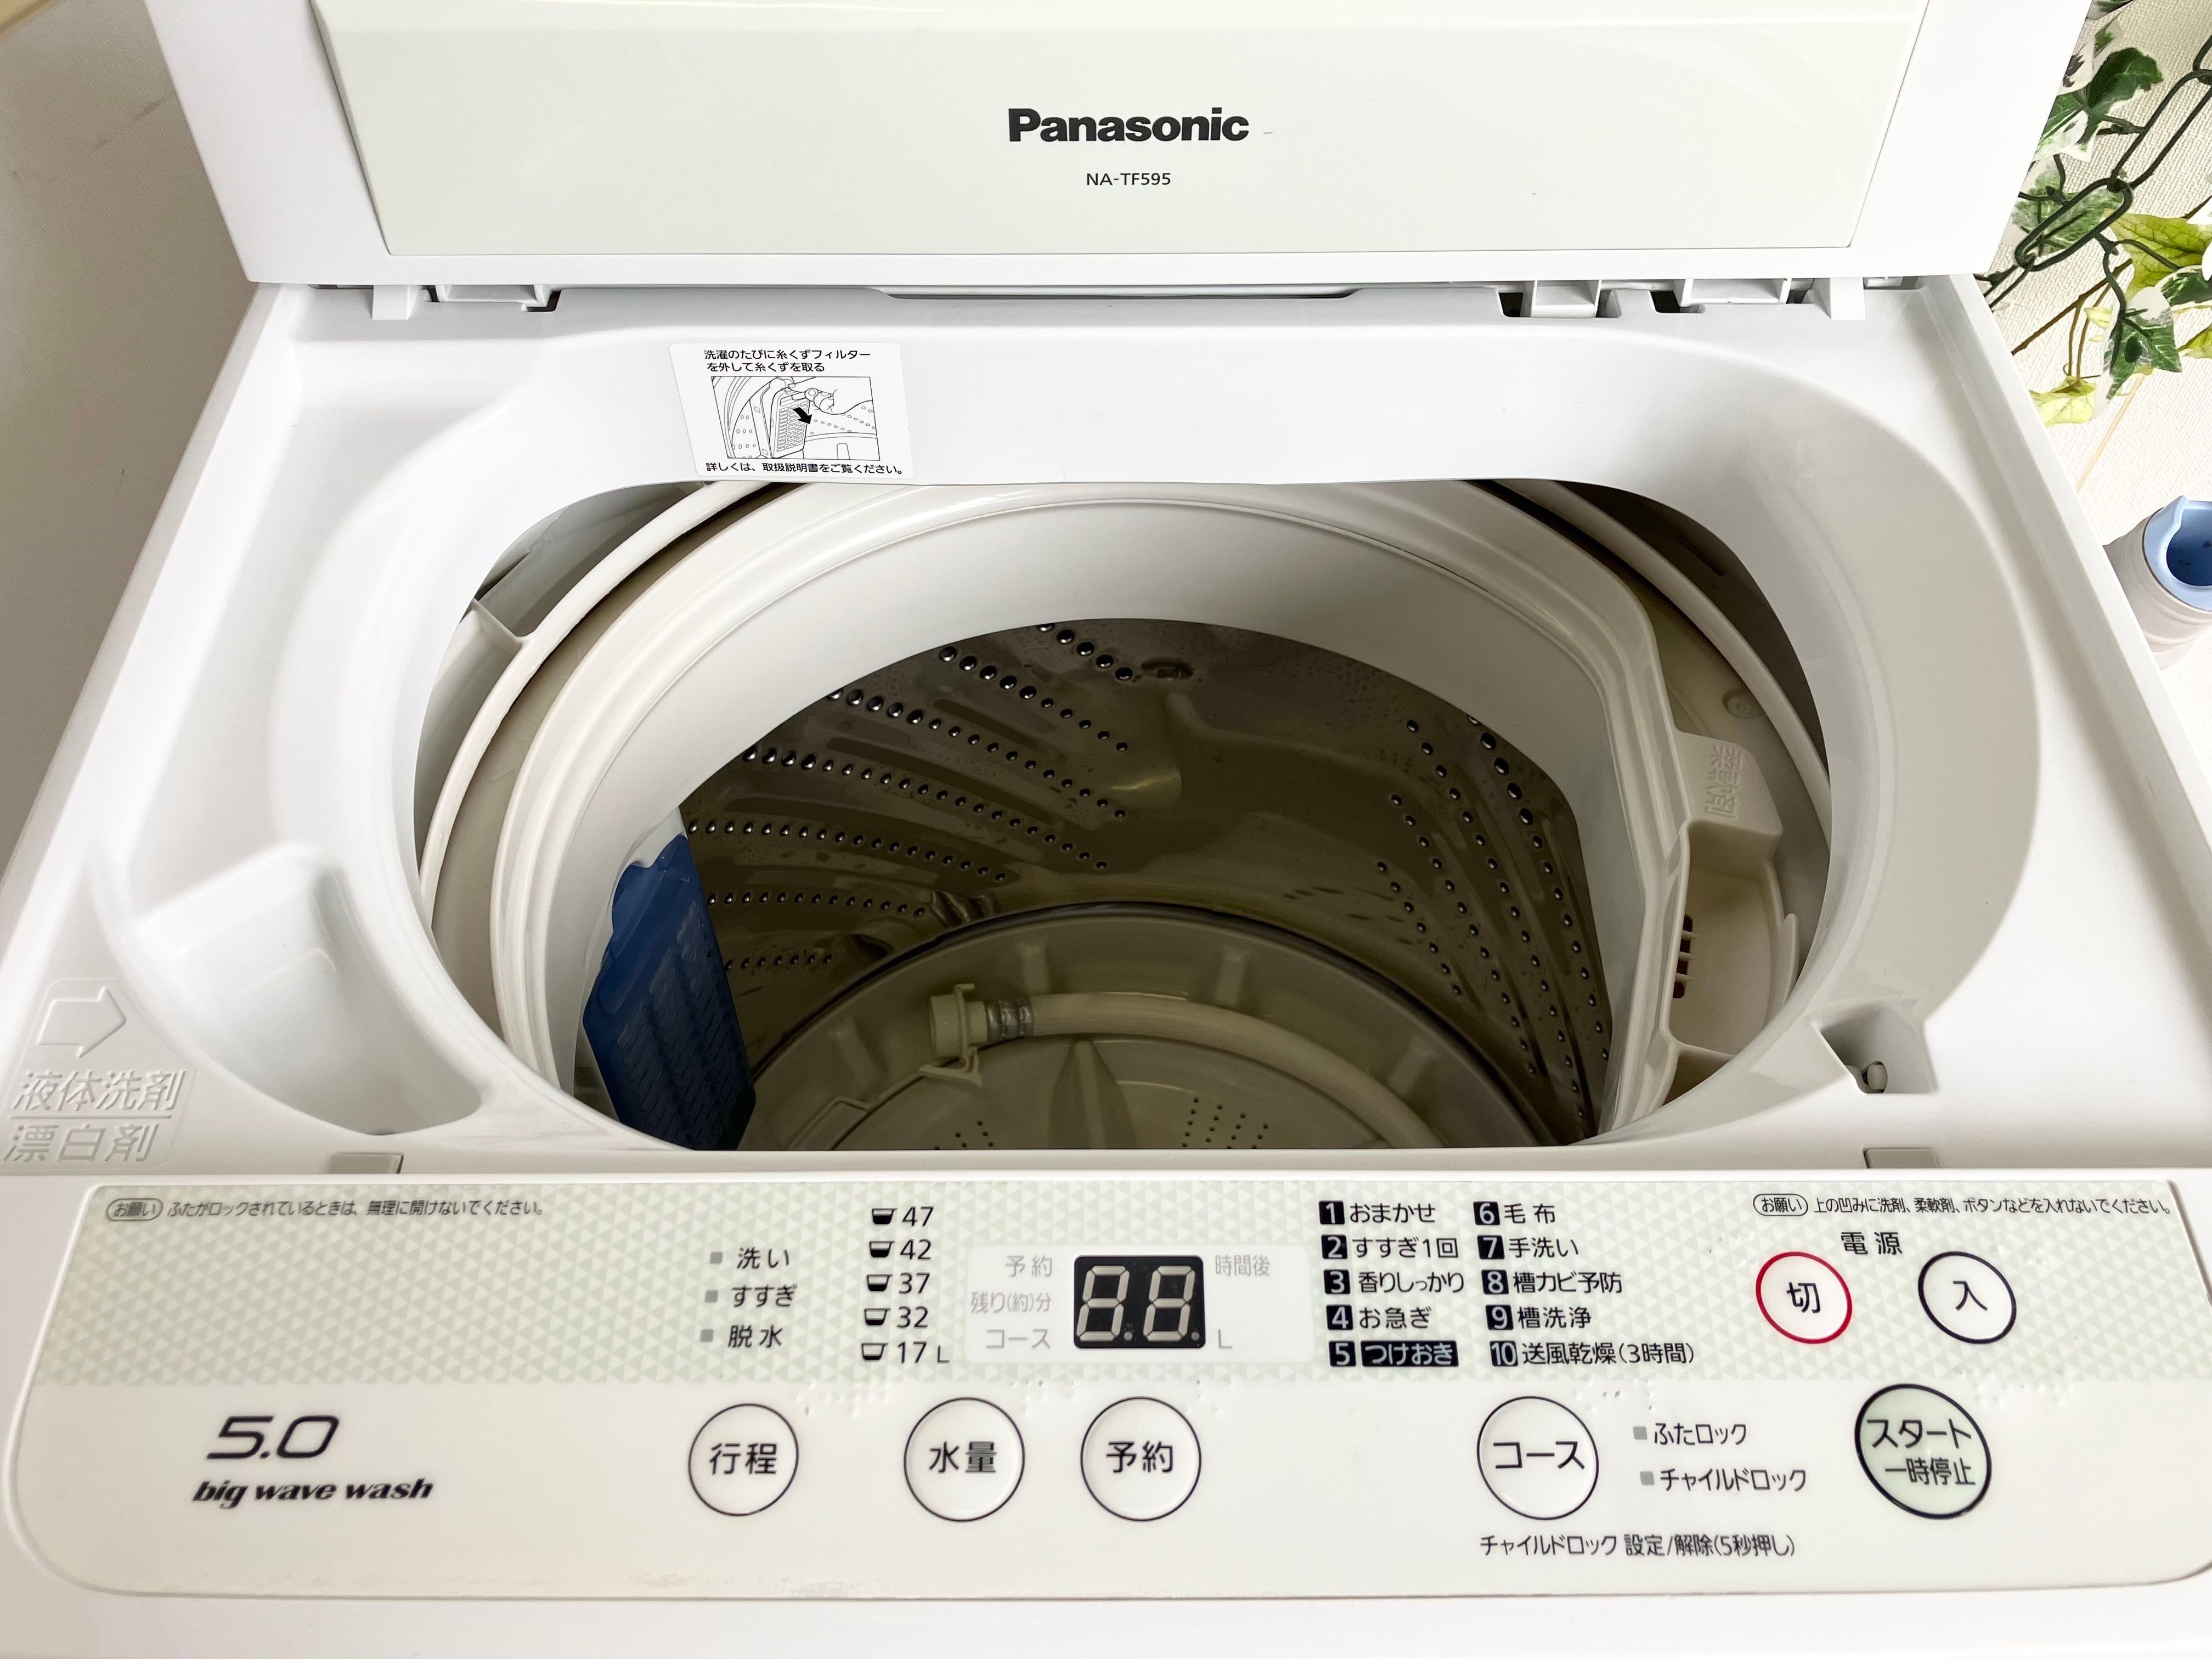 5.0kg Panasonic 洗濯機 2015年製 | 中村区亀島リサイクルショップ 